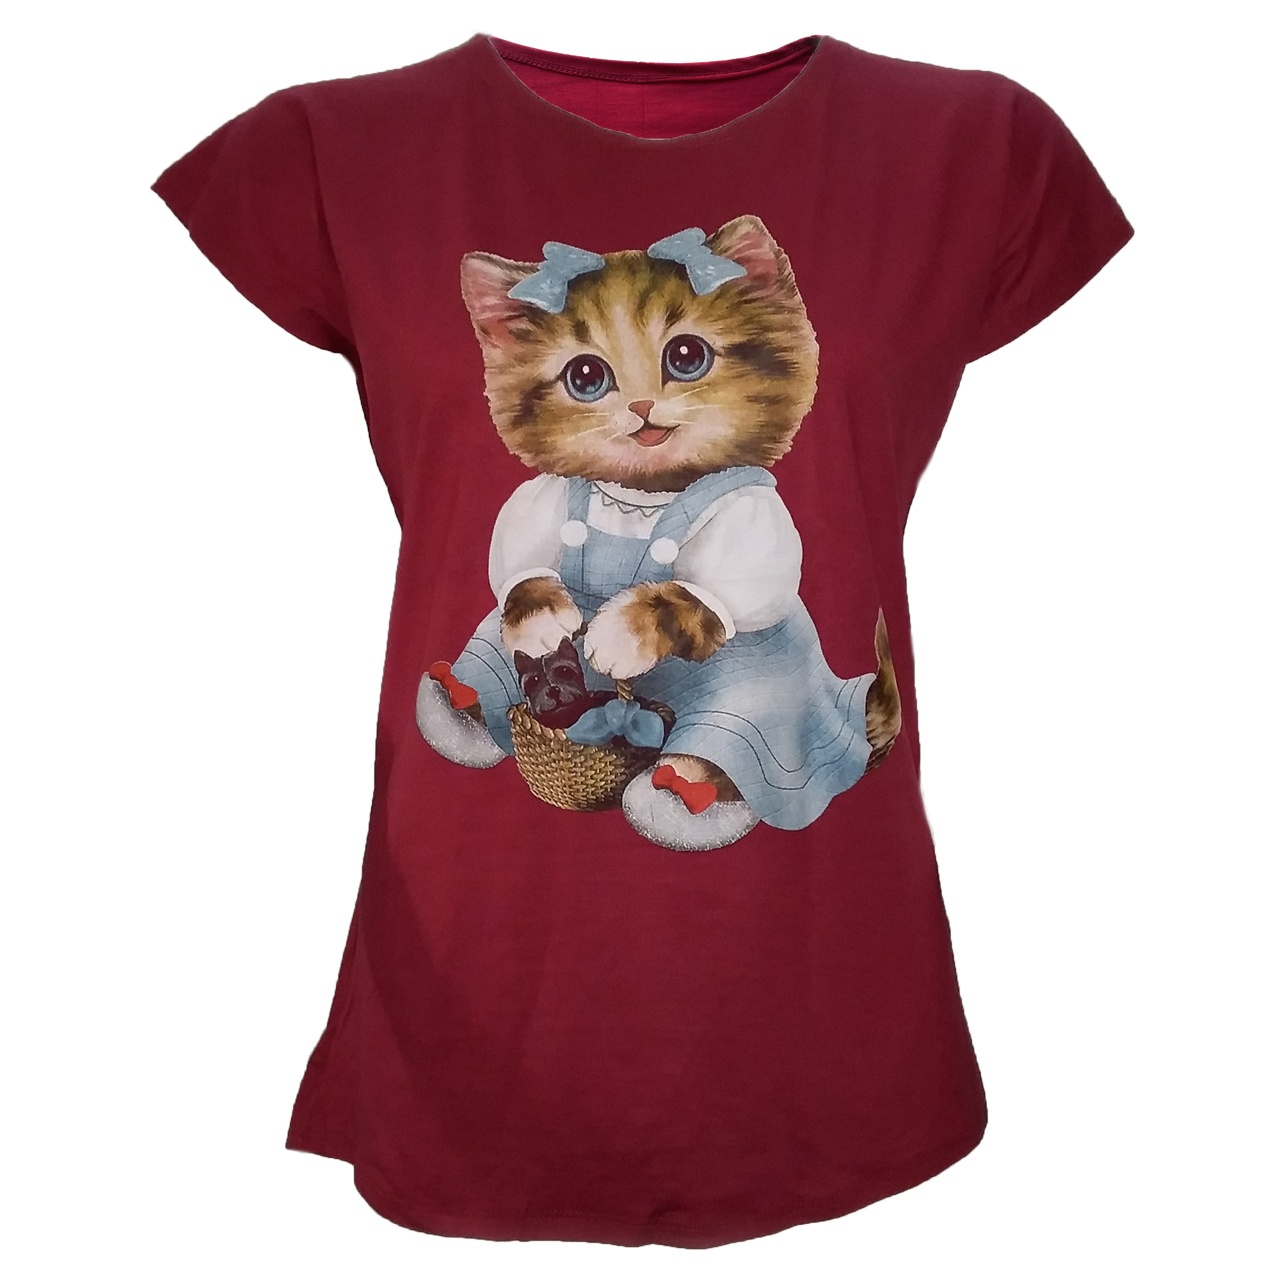 تیشرت زنانه طرح گربه کد tm-511 رنگ زرشکی